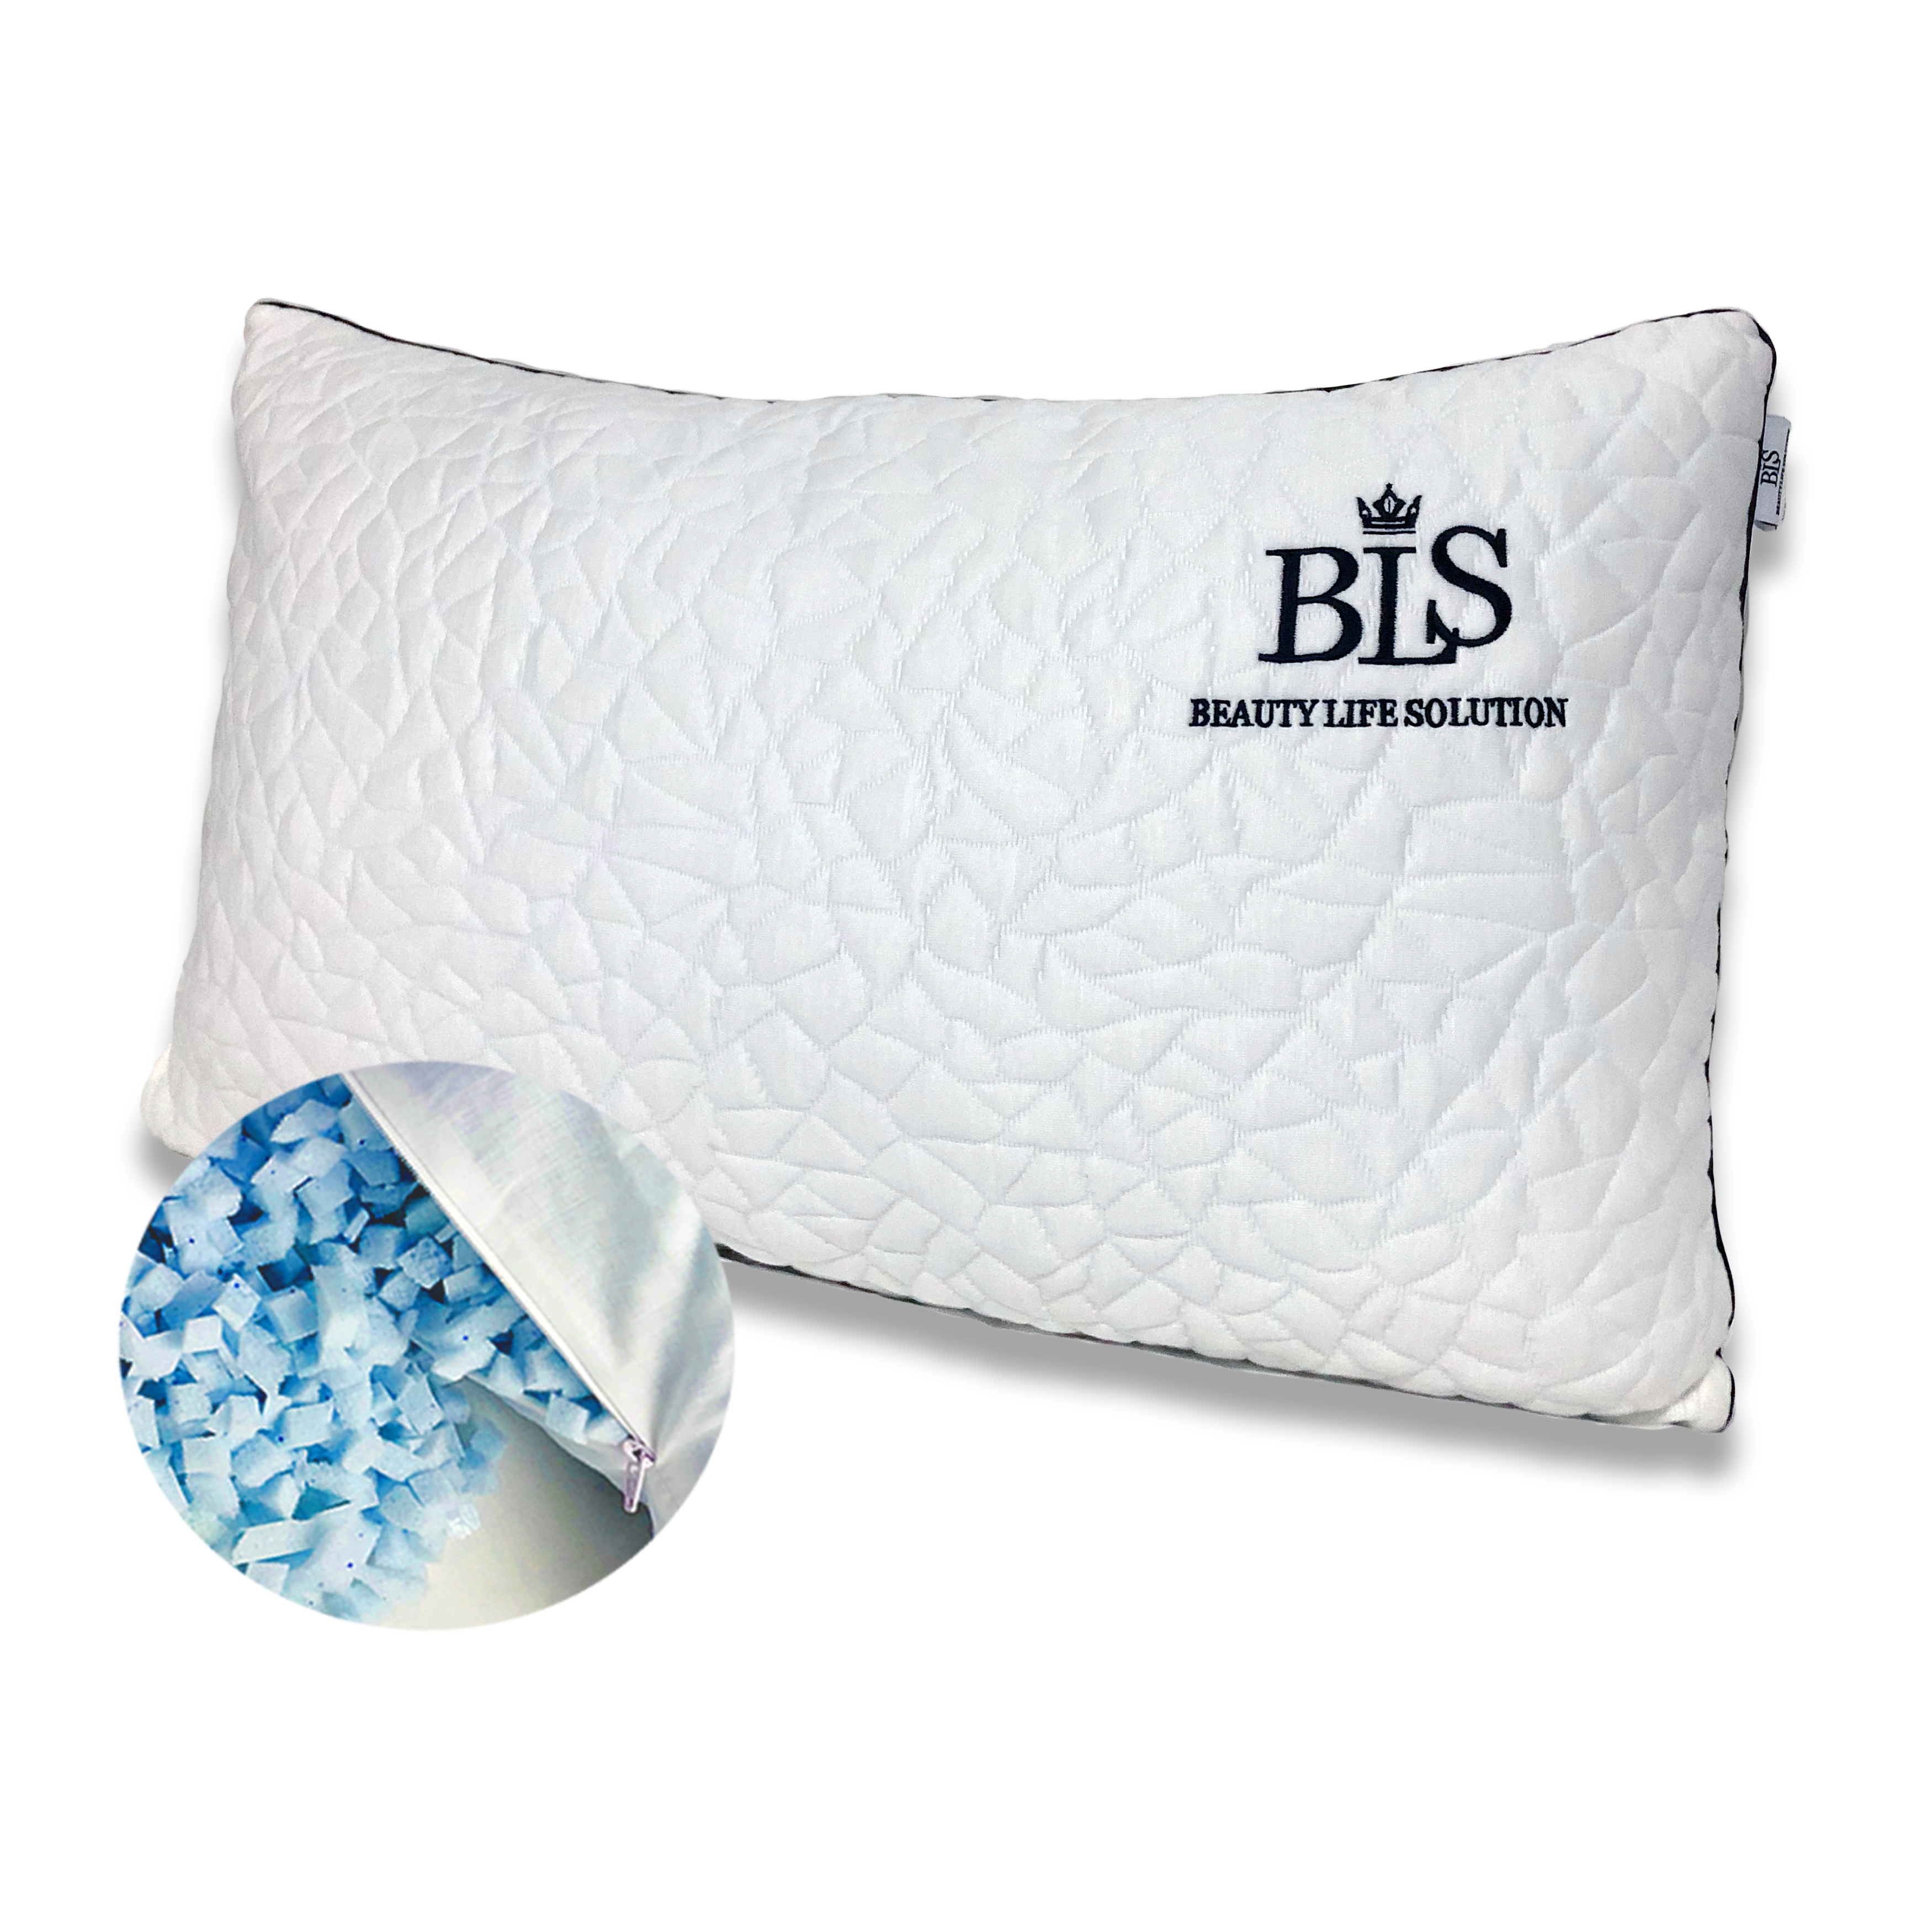 BLS Premium Adjustable Shredded Memory Foam Pillow